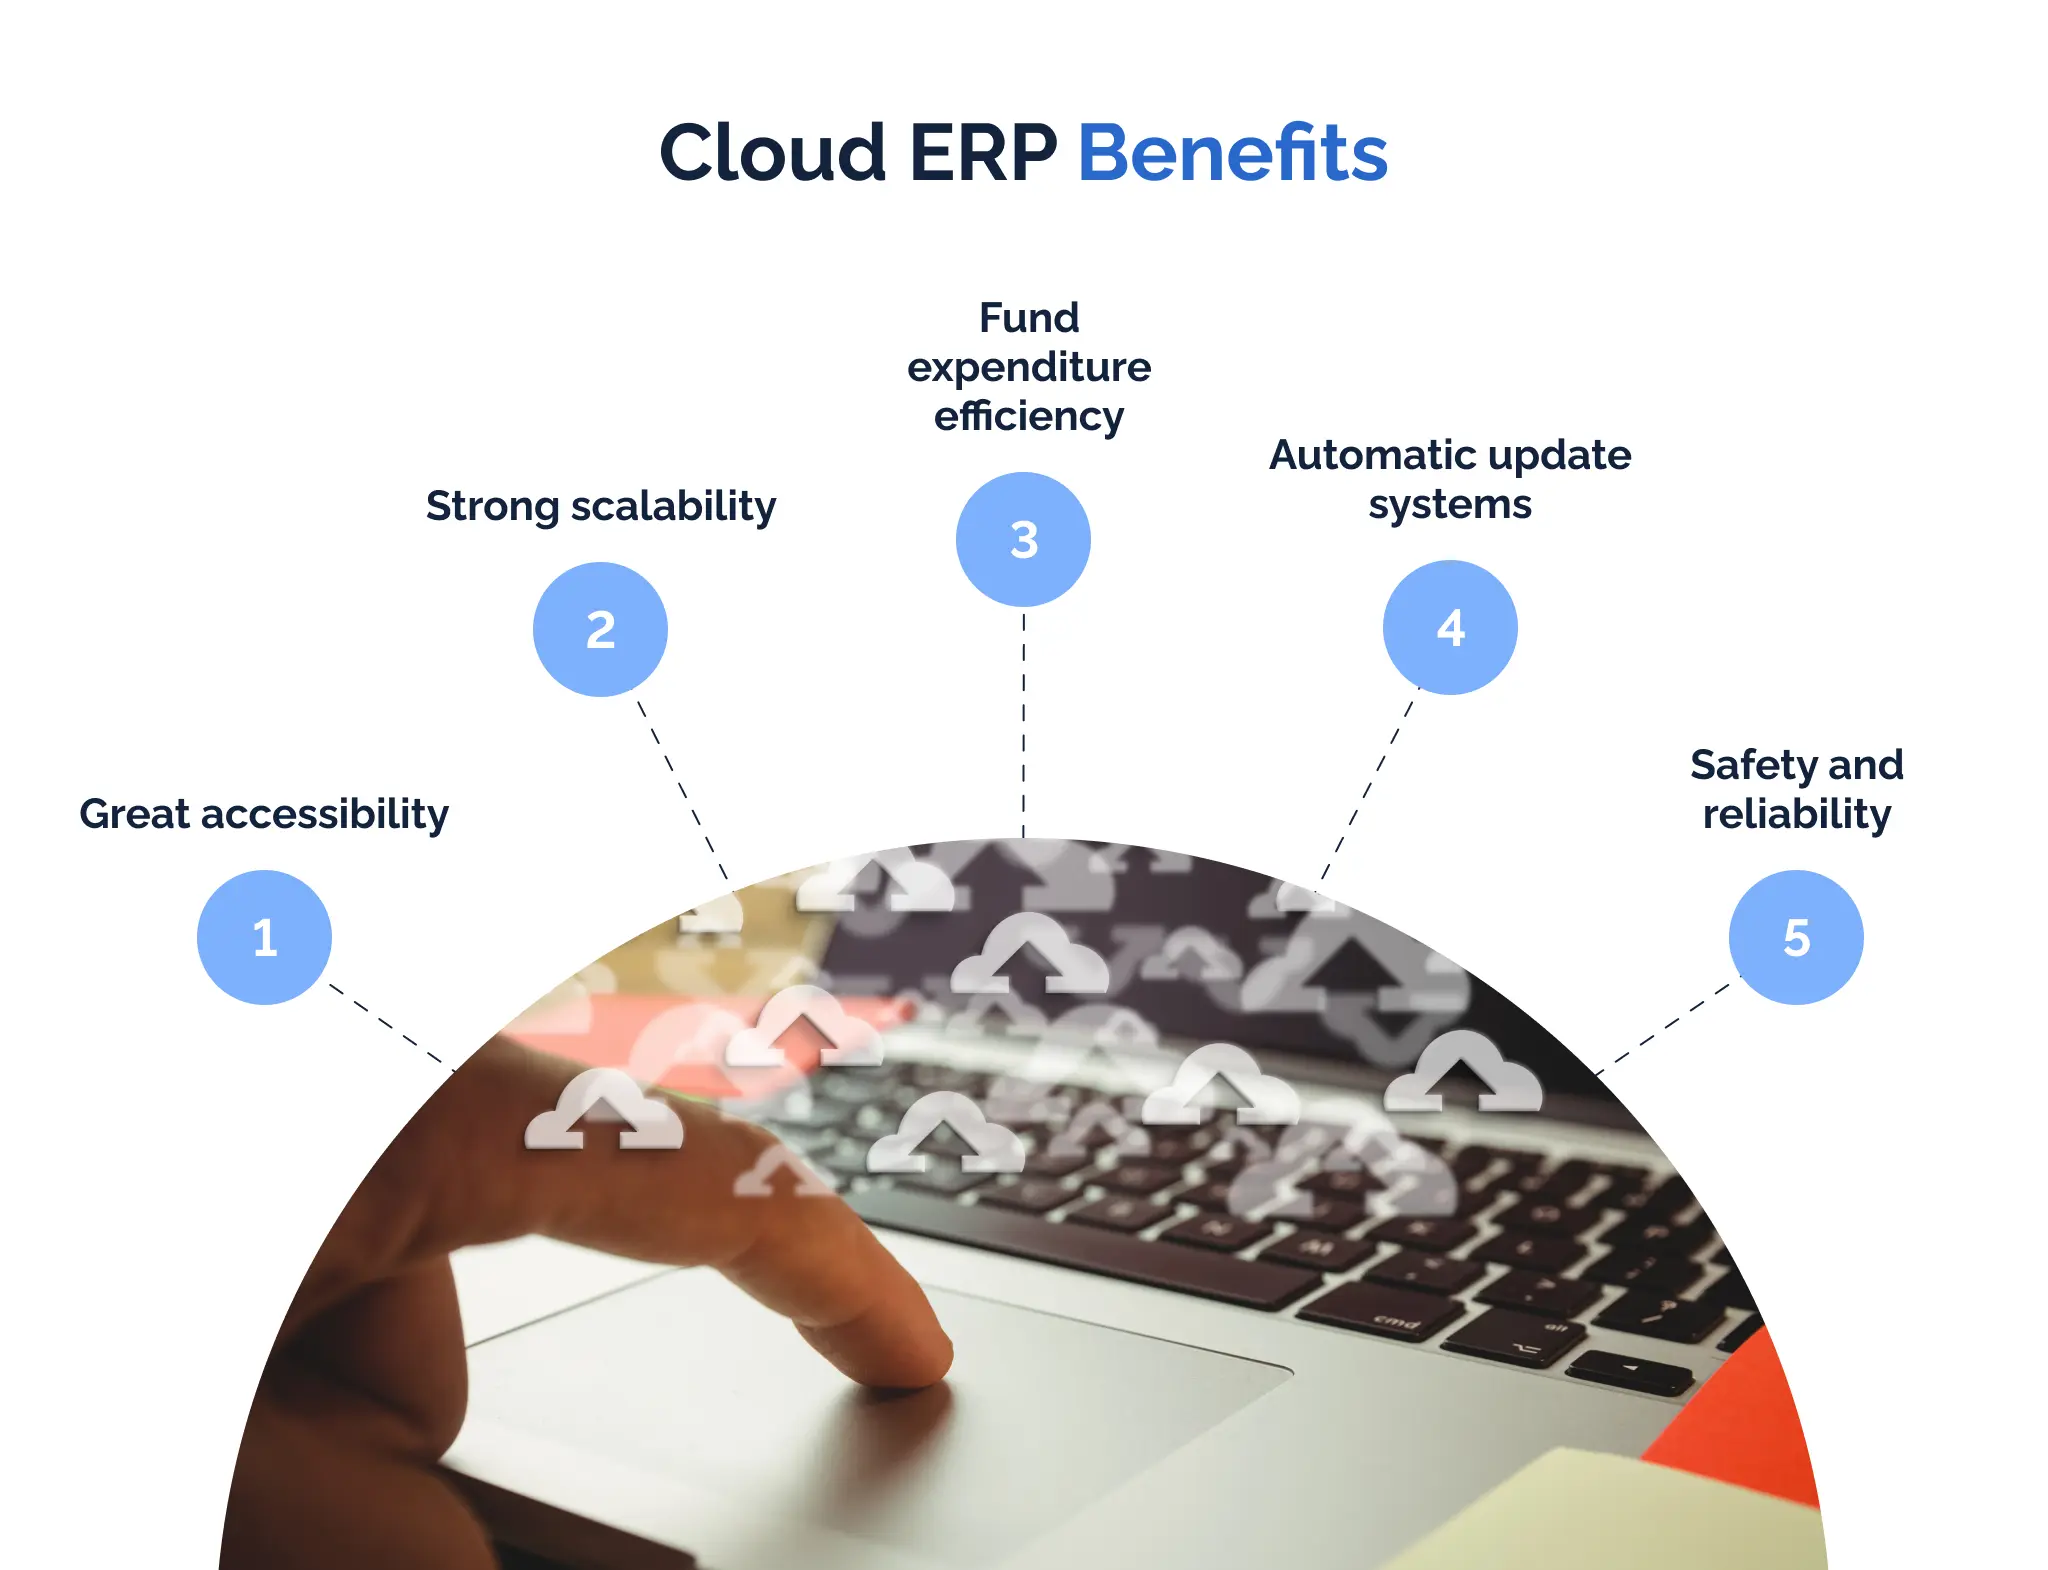 Cloud ERP benefits